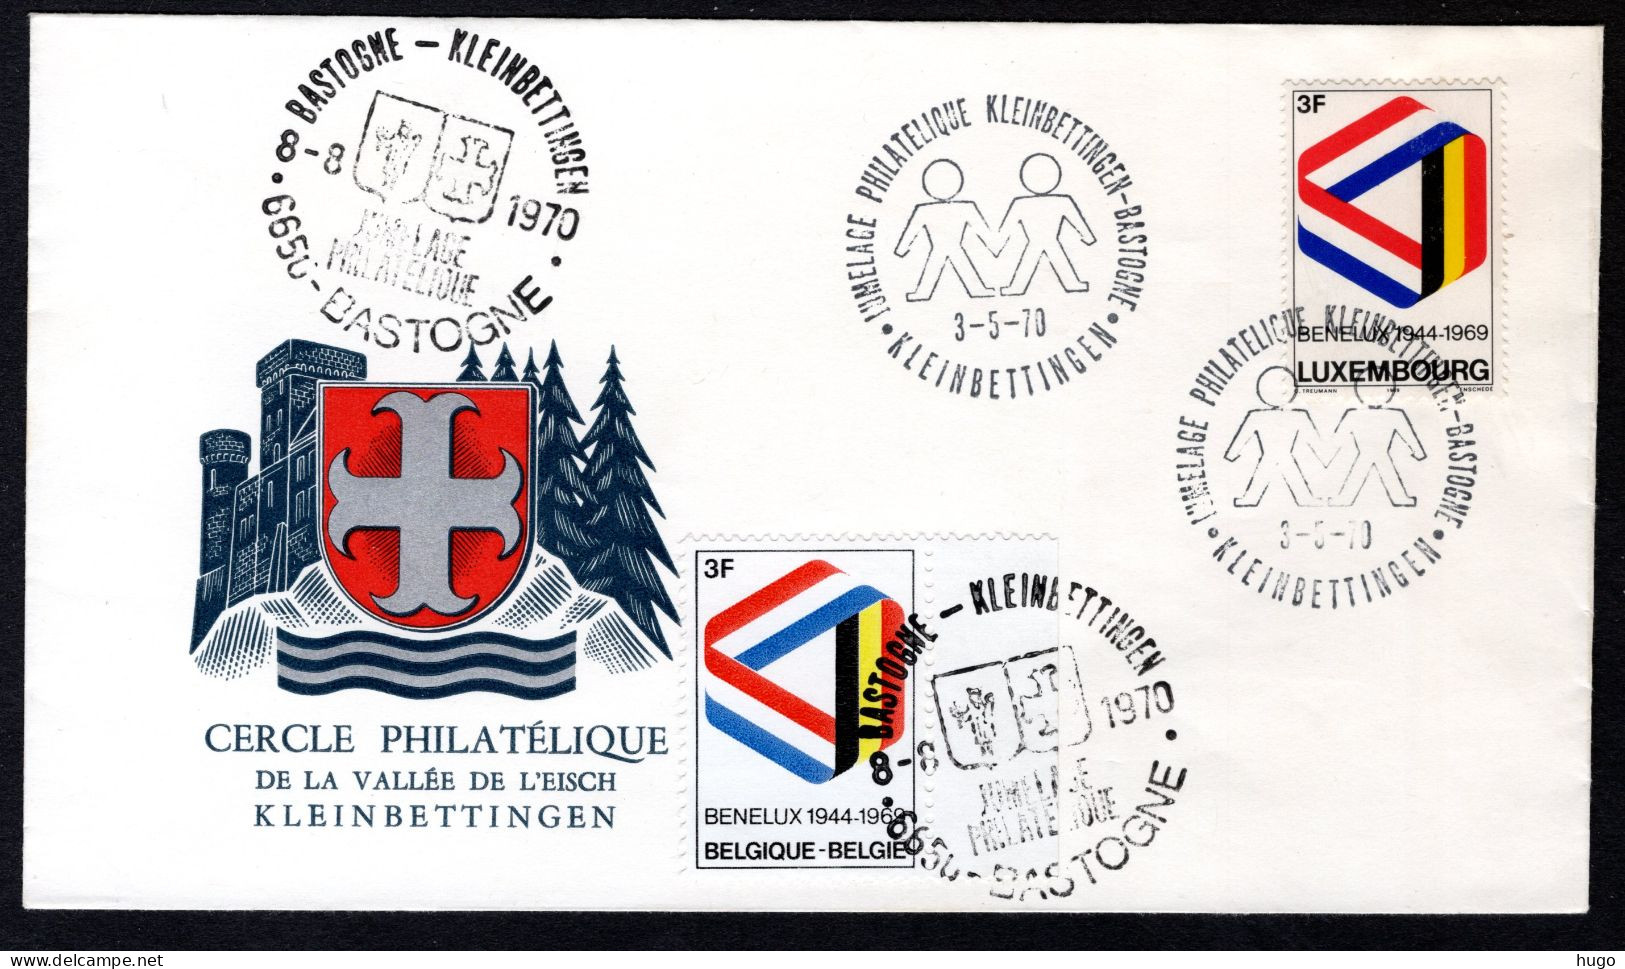 LUXEMBURG Yt. Jumelage Philatelique 3-5-1970 - Covers & Documents